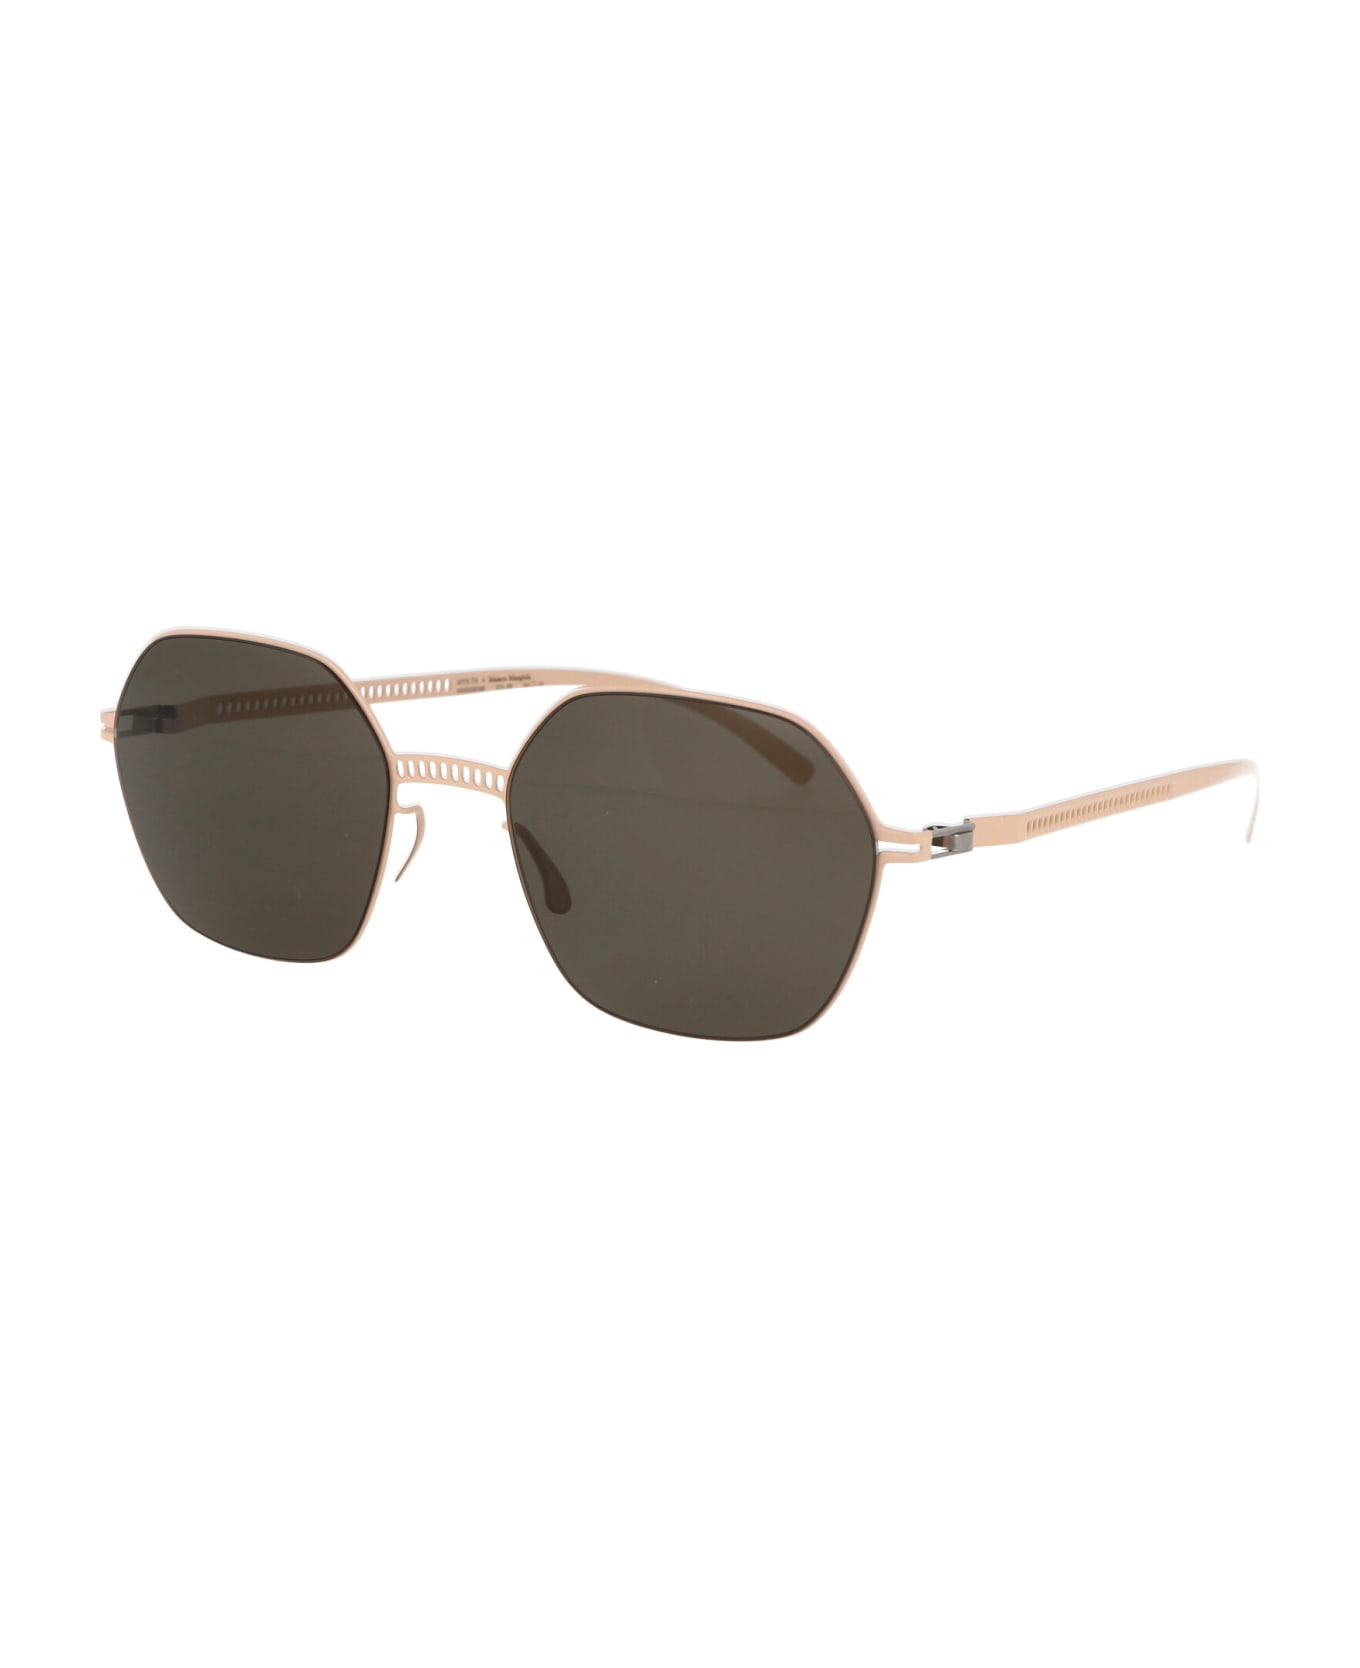 Mykita Mmesse028 Sunglasses - 221 E9 Nude Raw Green Solid